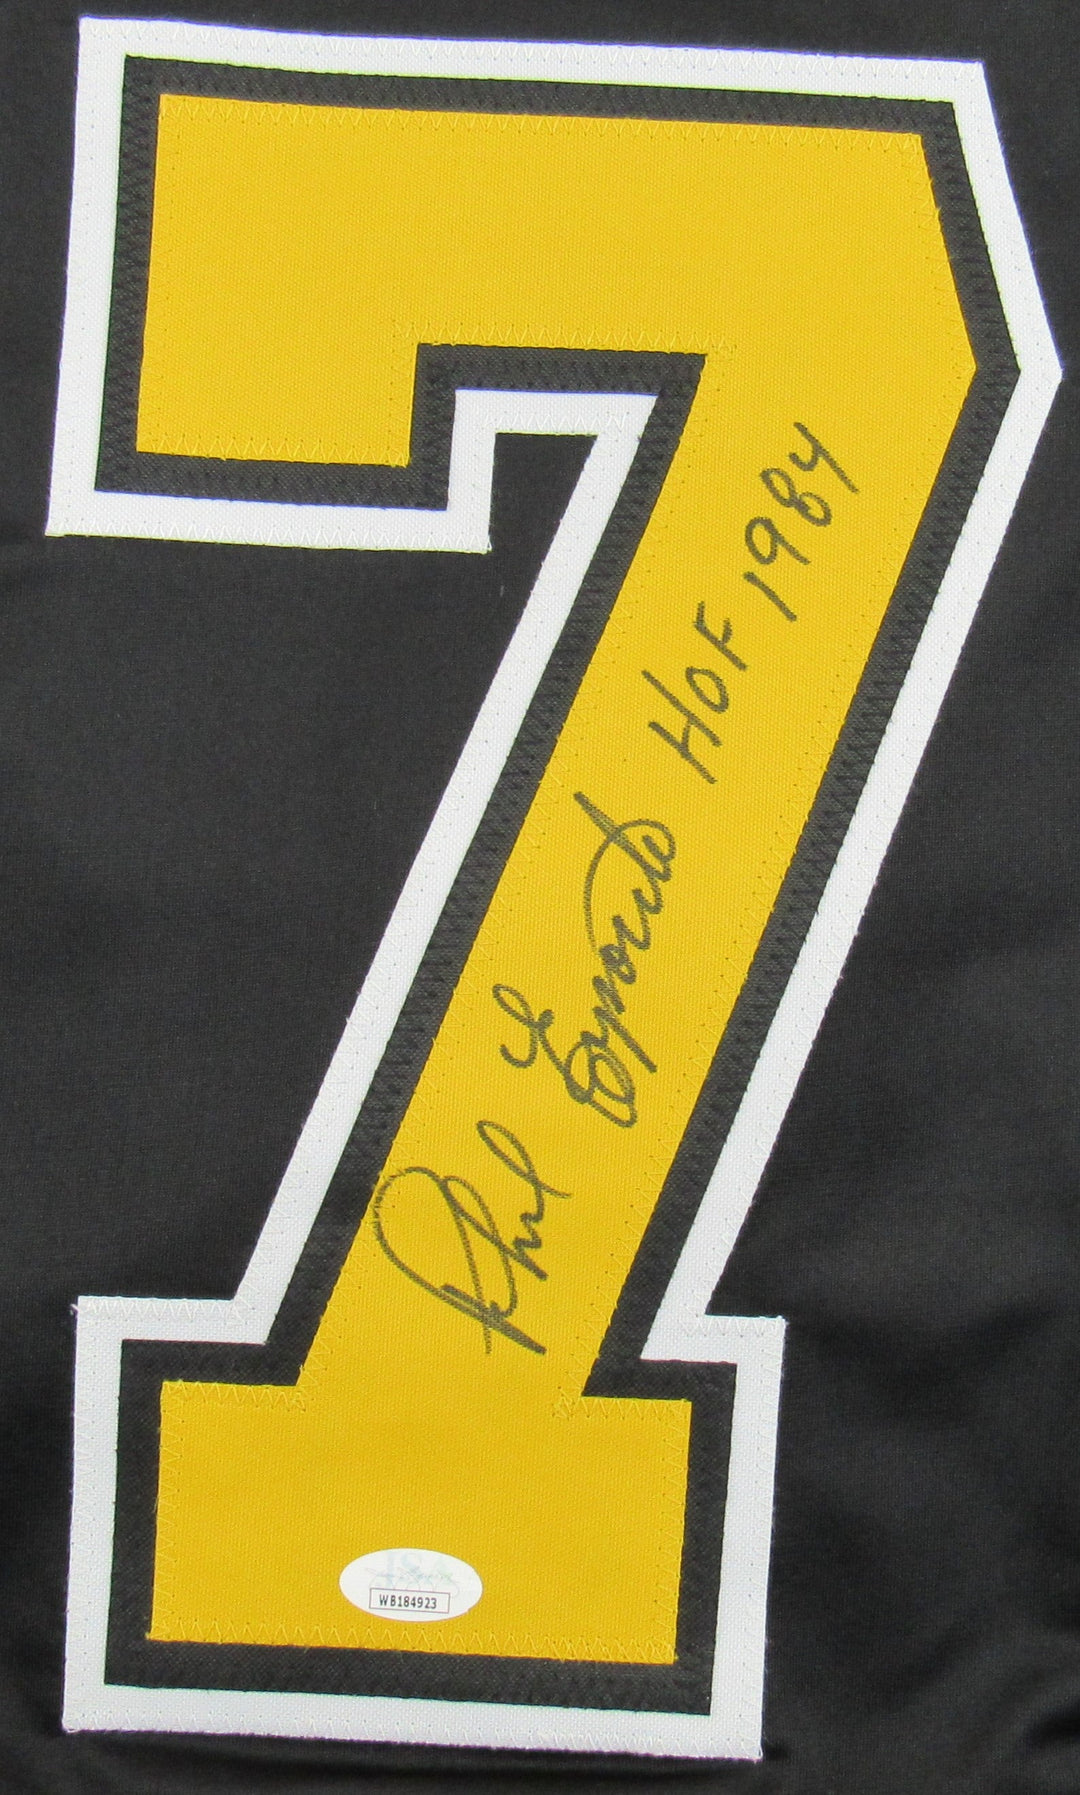 Phil Esposito Signed Replica Bruins Jersey w/ HOF Insc JSA Certified